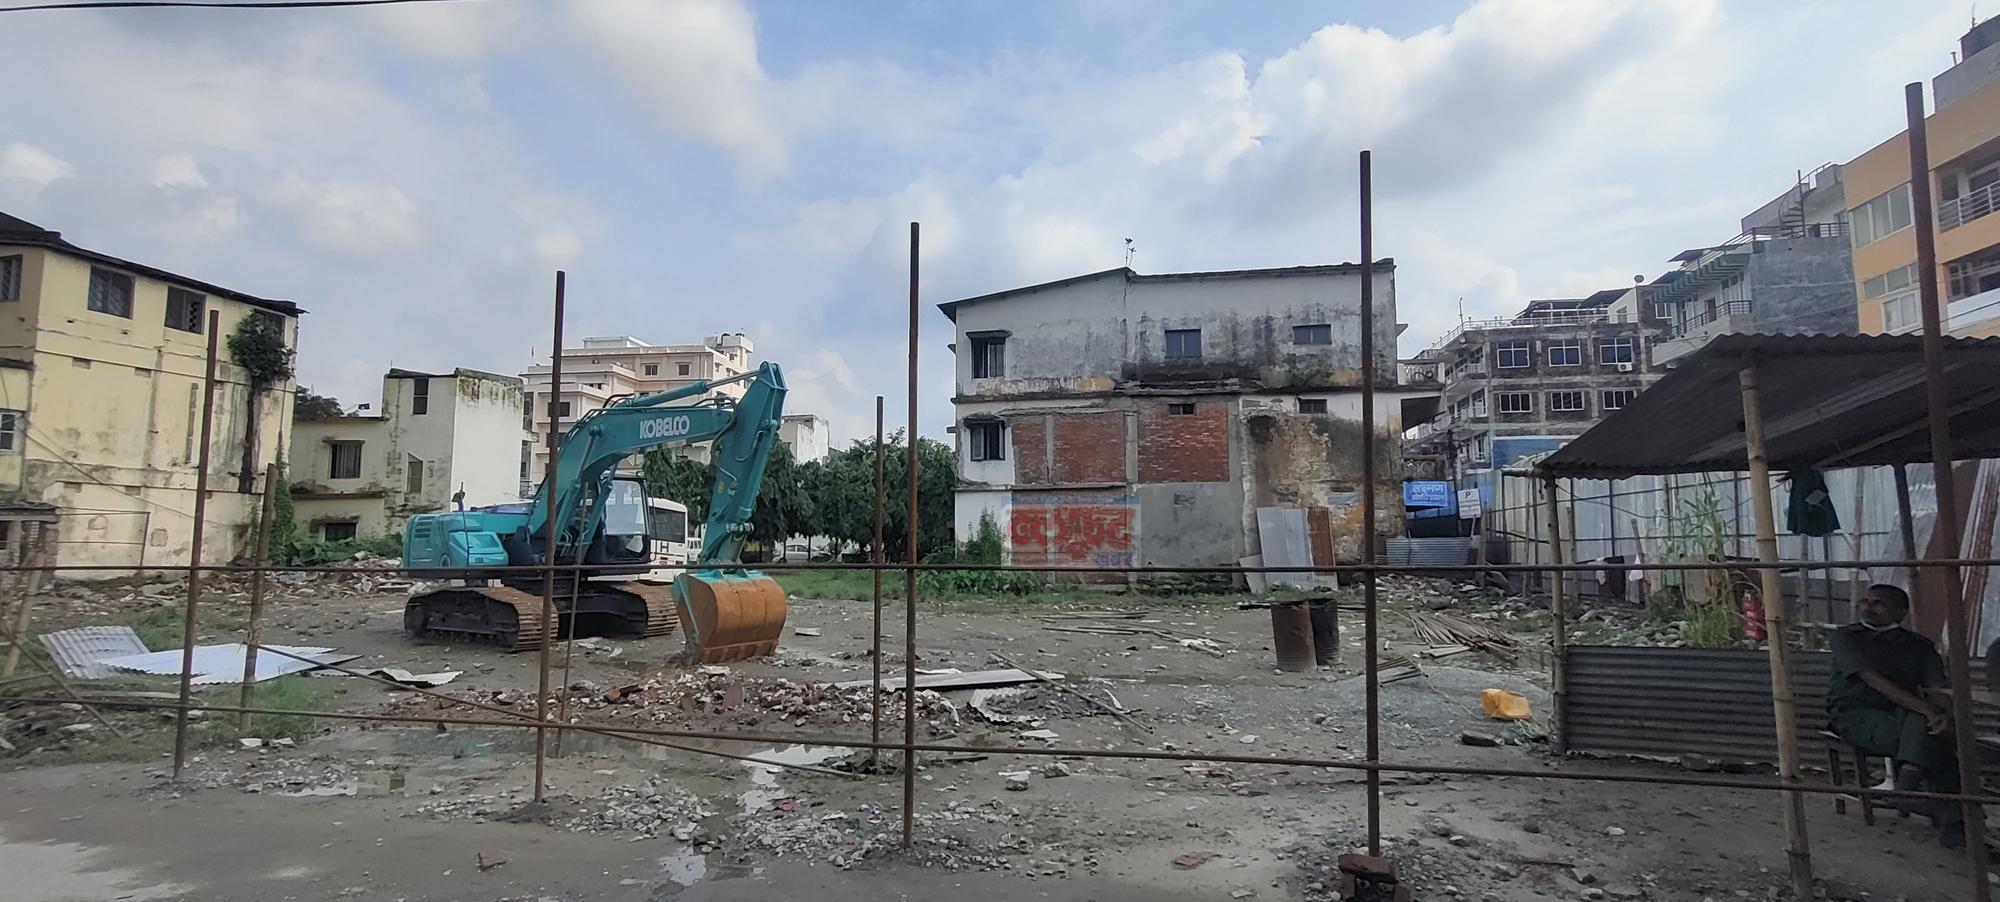 Koshi Hospital Construction Site